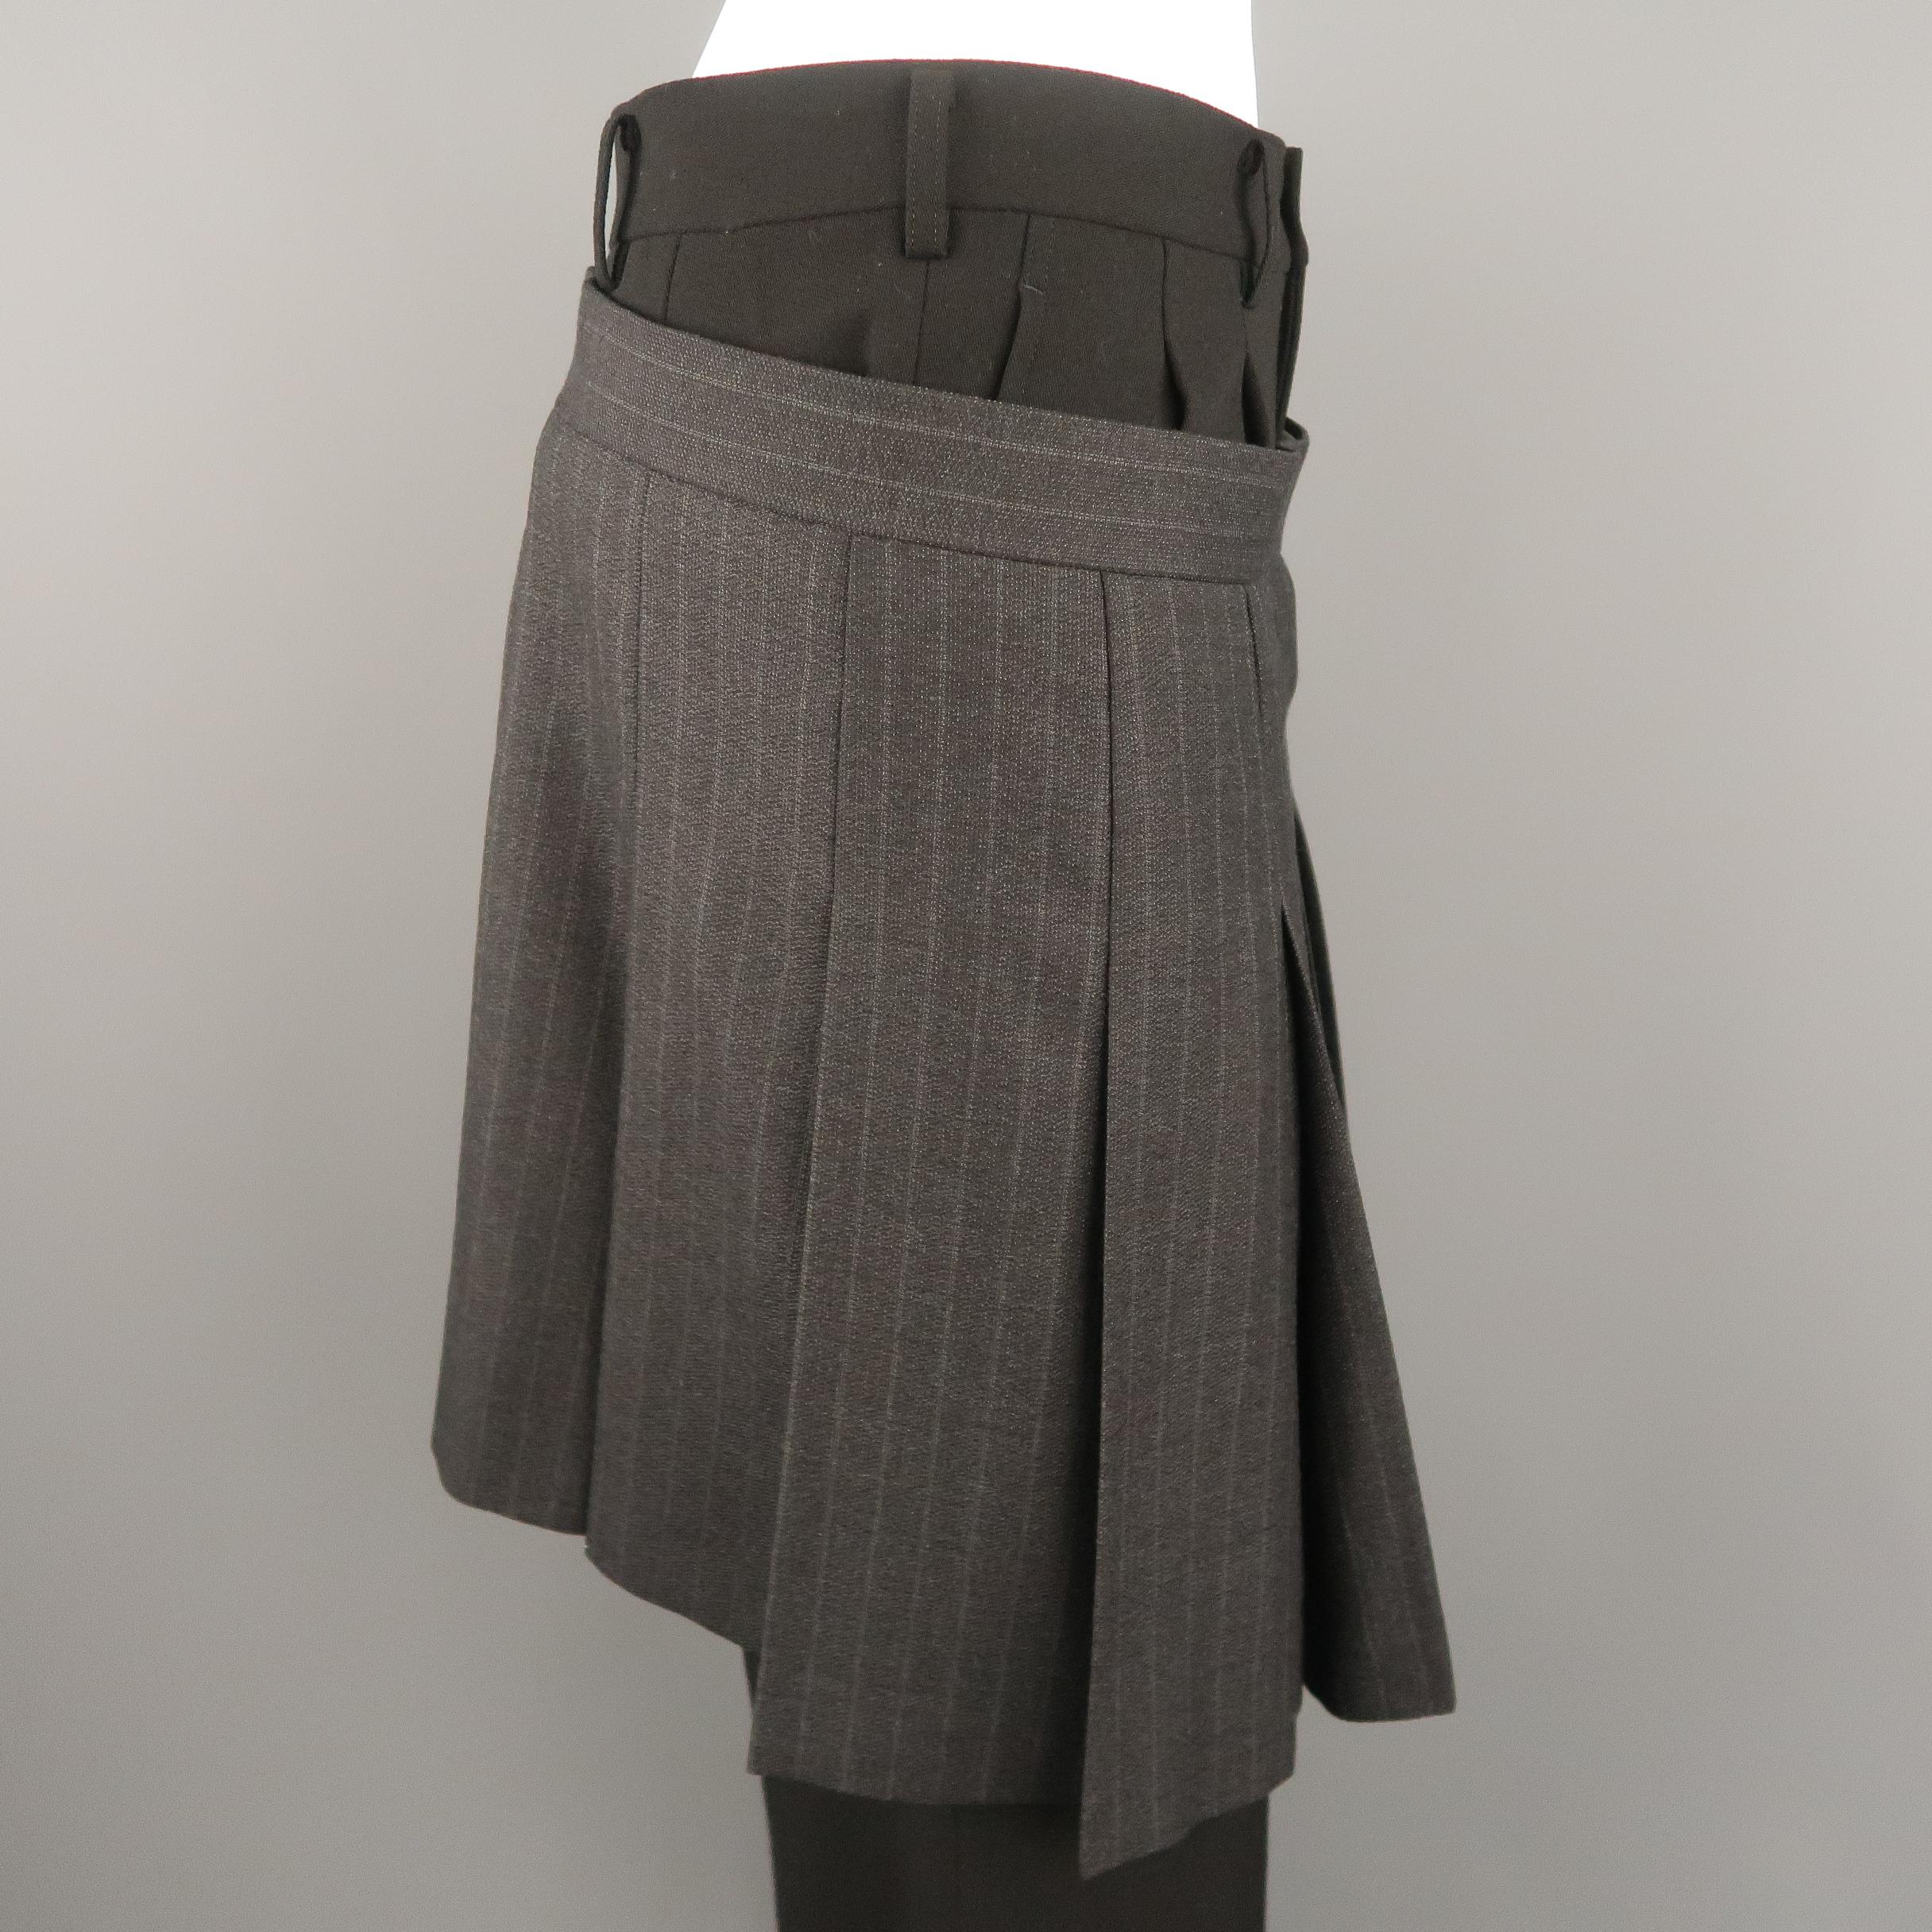 skirt waist adjuster